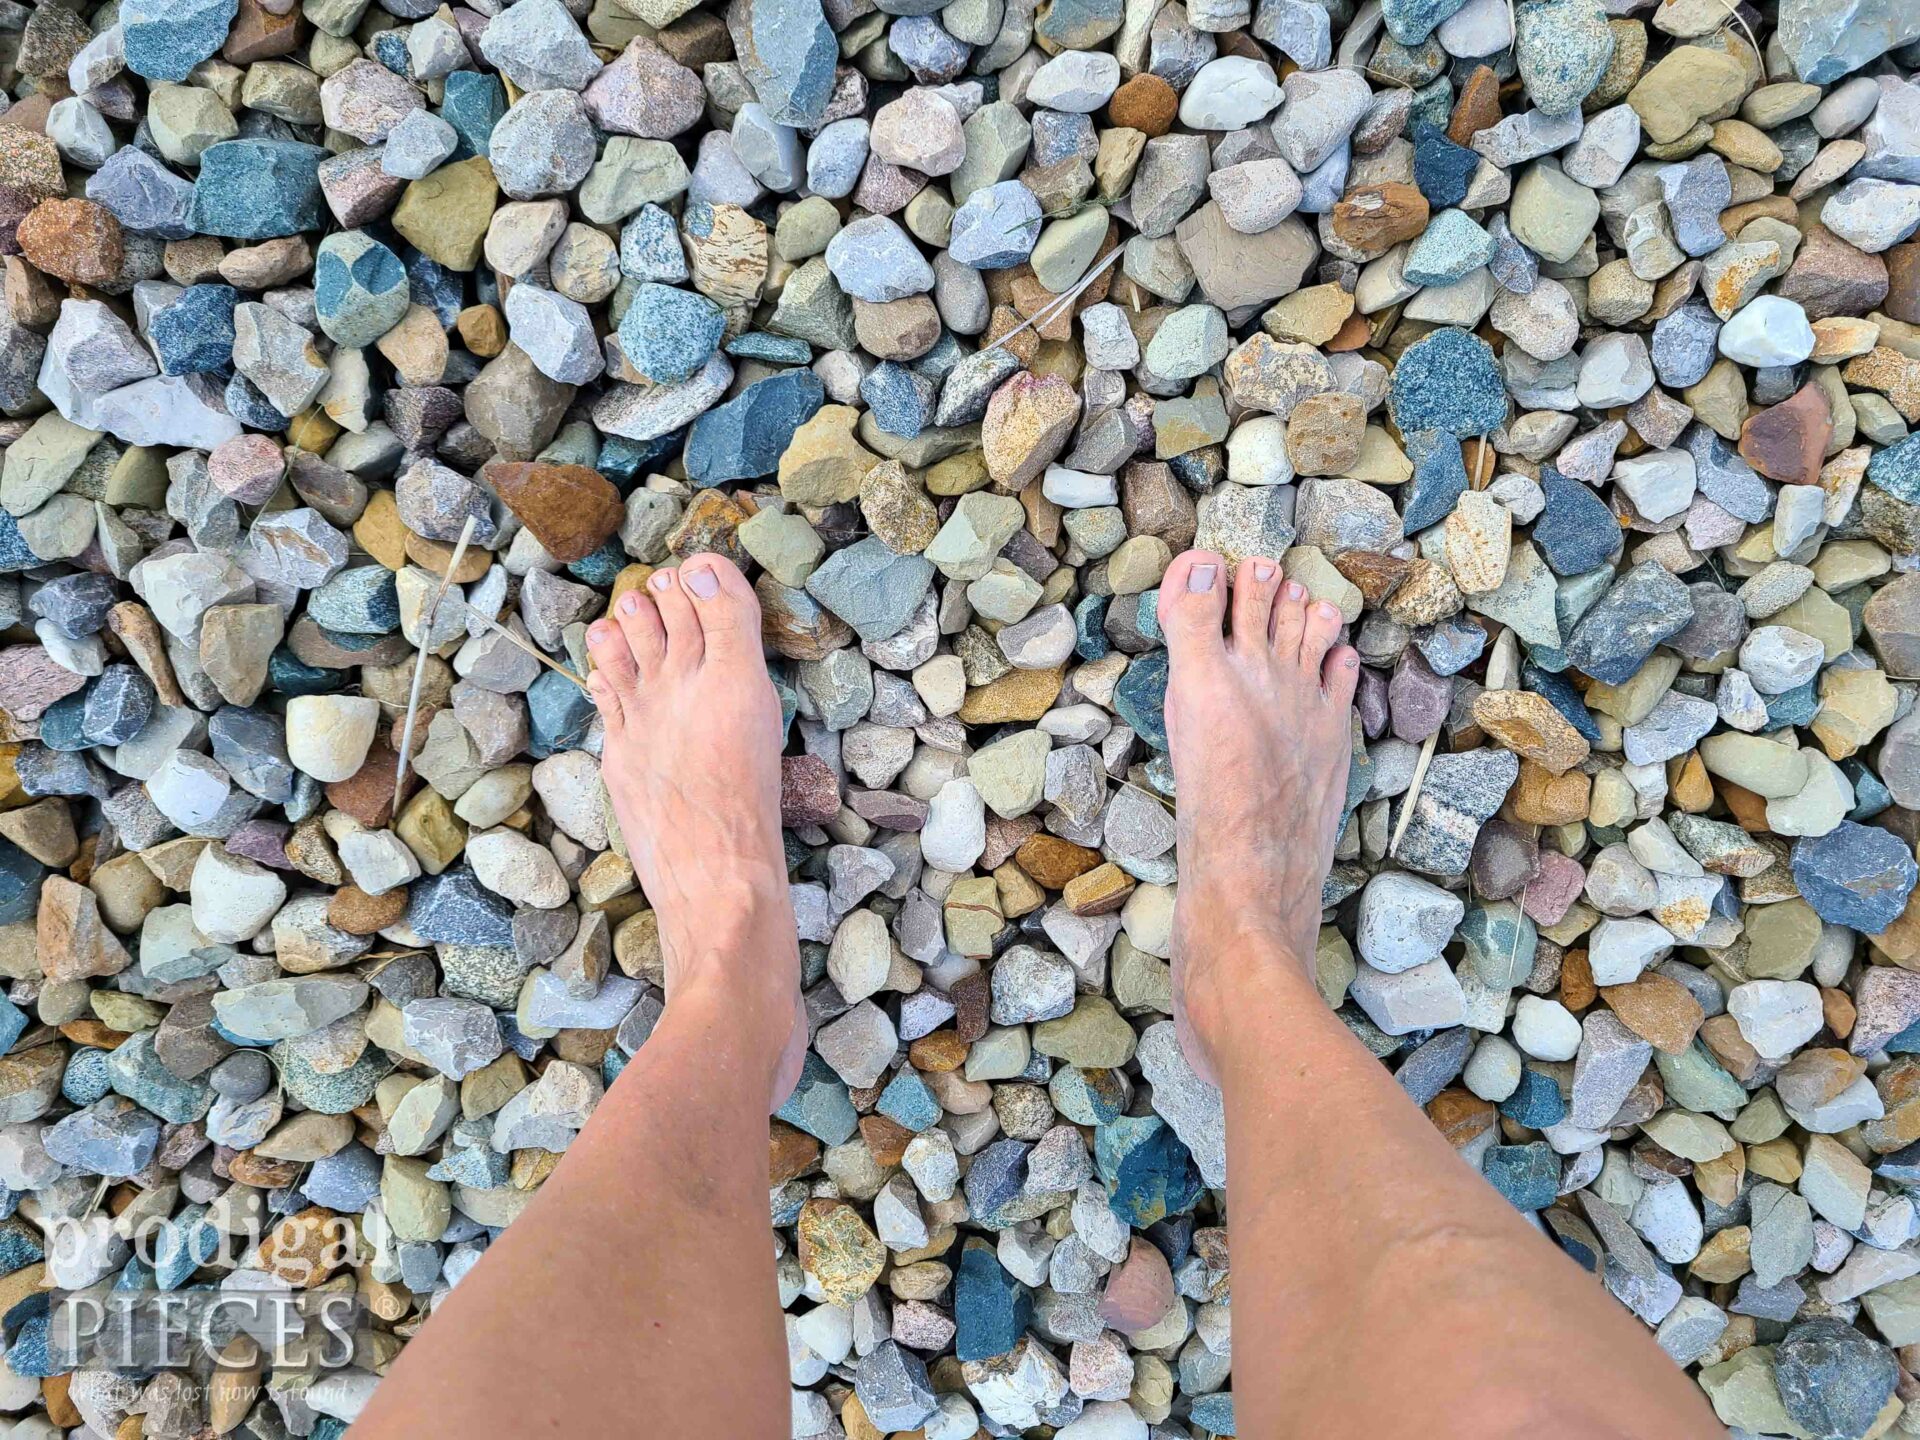 Barefoot Walking on Rocks | My Barefoot Journey Intro by Larissa of Prodigal Pieces | prodigalipieces.com #prodigalpieces